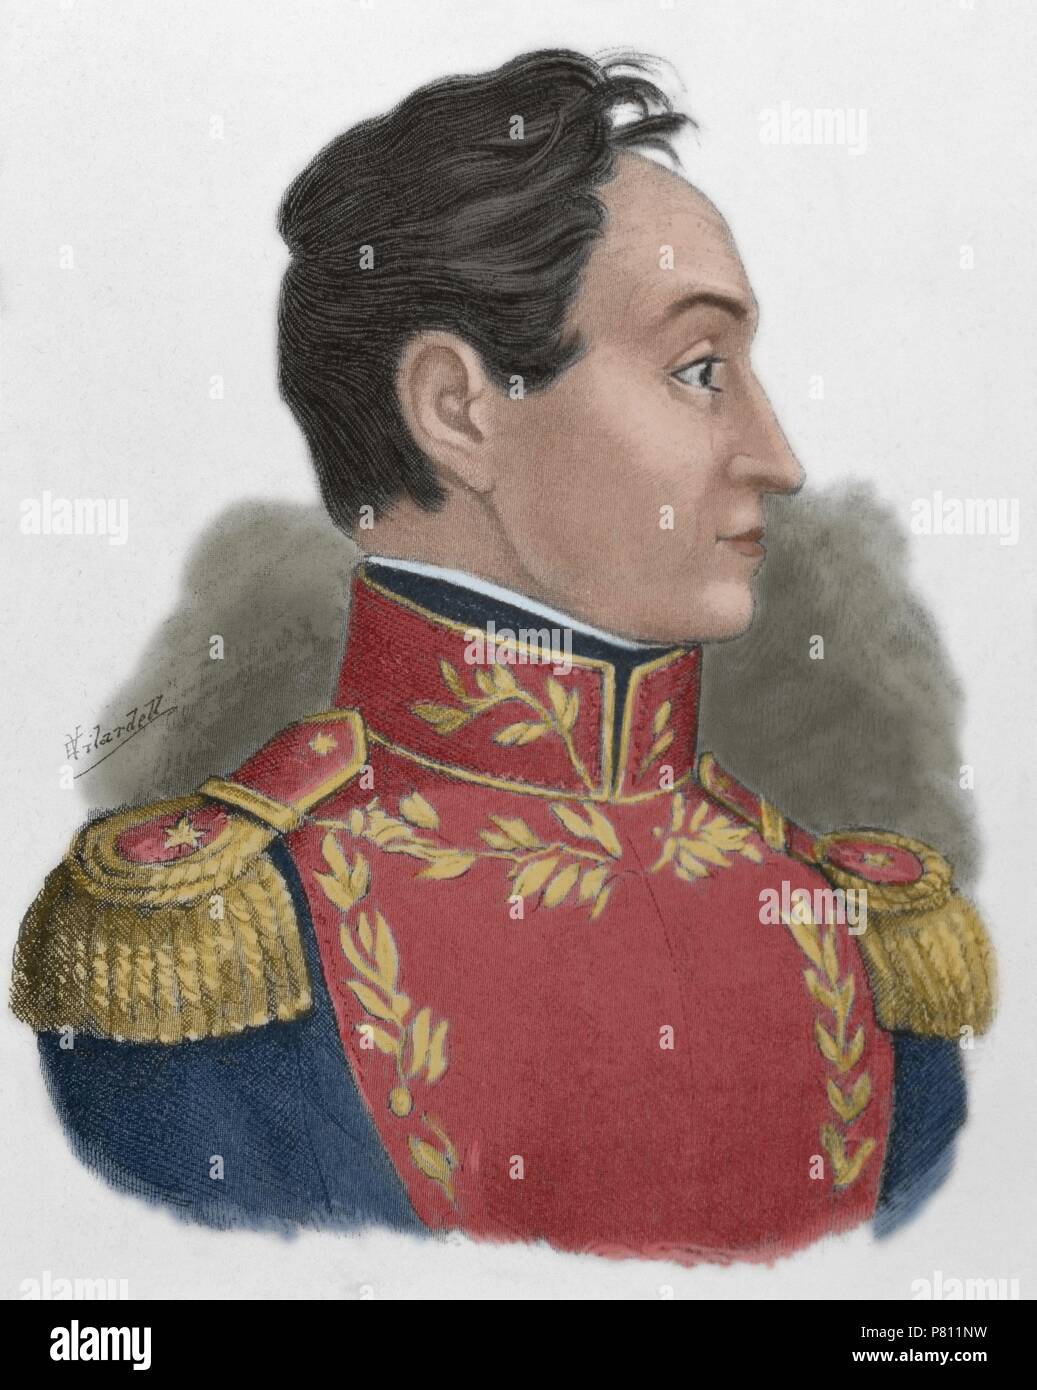 Simon Bolivar (1793-1830). Military and Venezuelan statesman called 'The Liberator'. Portrait.  Engraving in 'Americanos Celebres', 1888. by E. Vilardell. Colored. Stock Photo